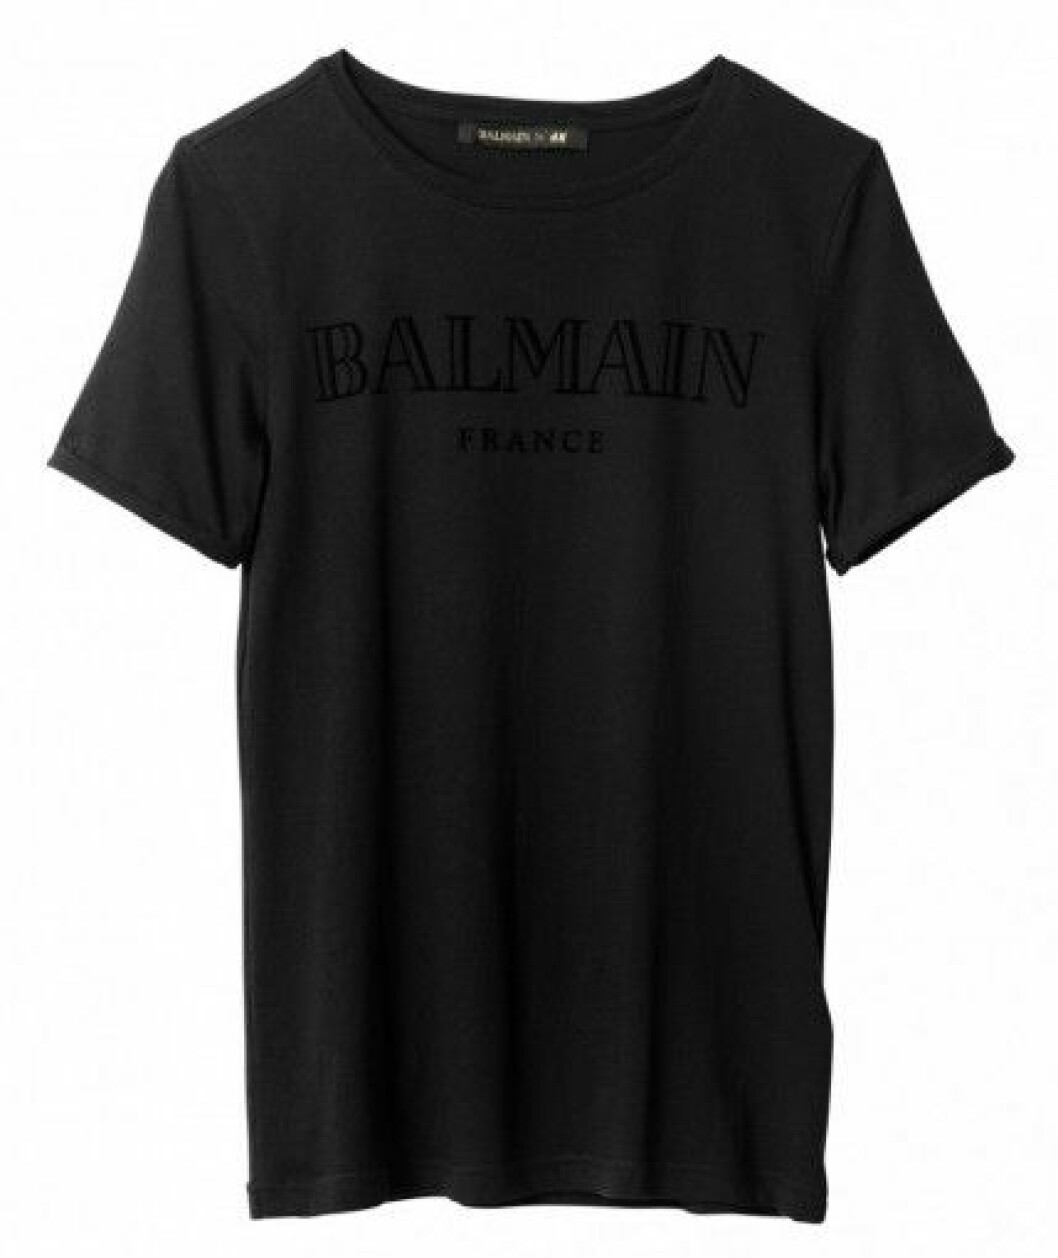 h&m balmain svart t-shirt